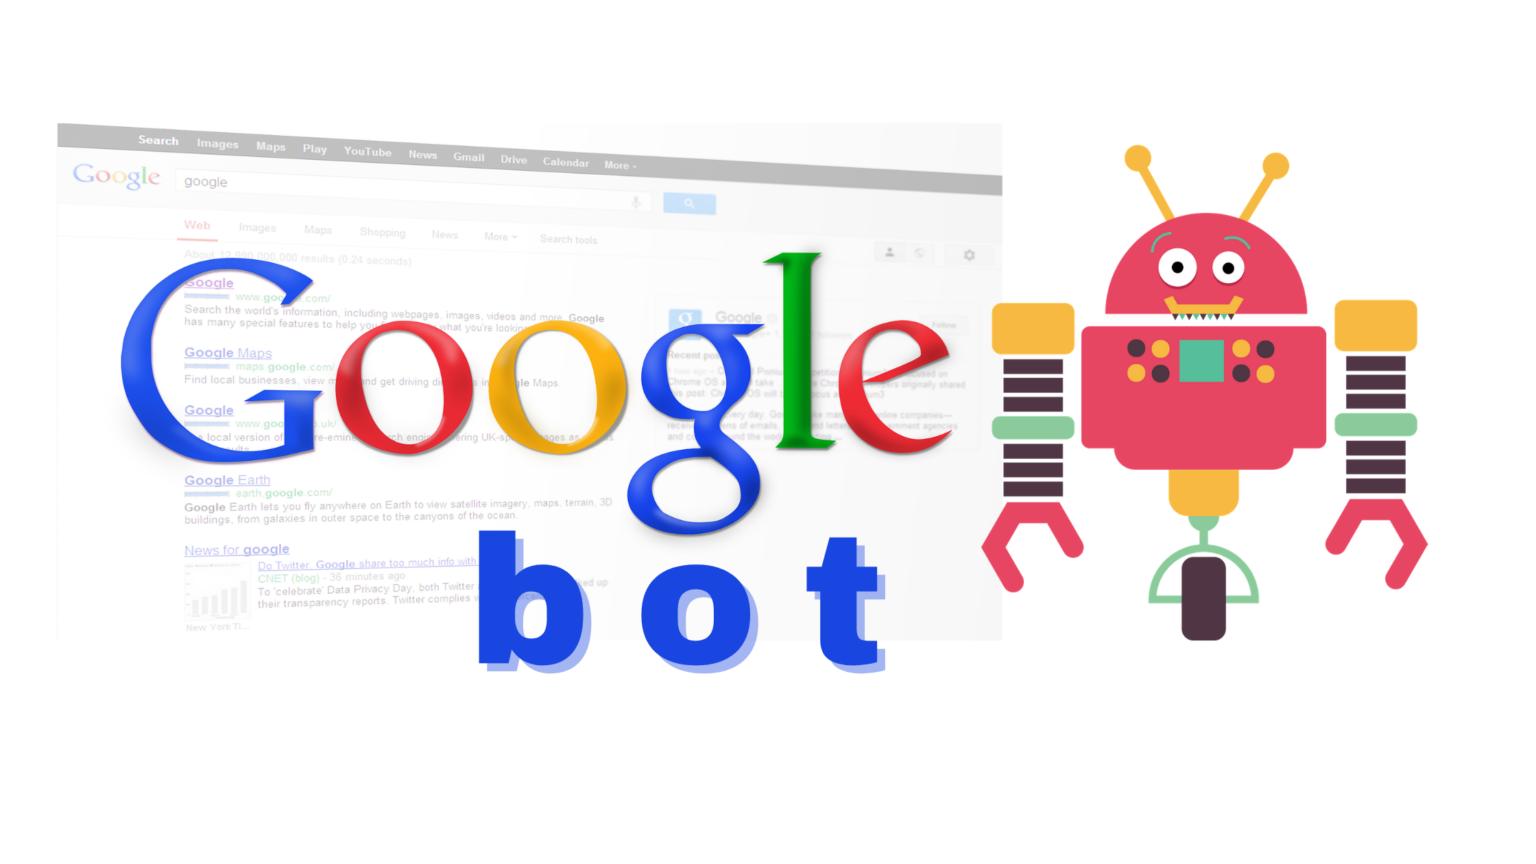 Googlebot web crawler